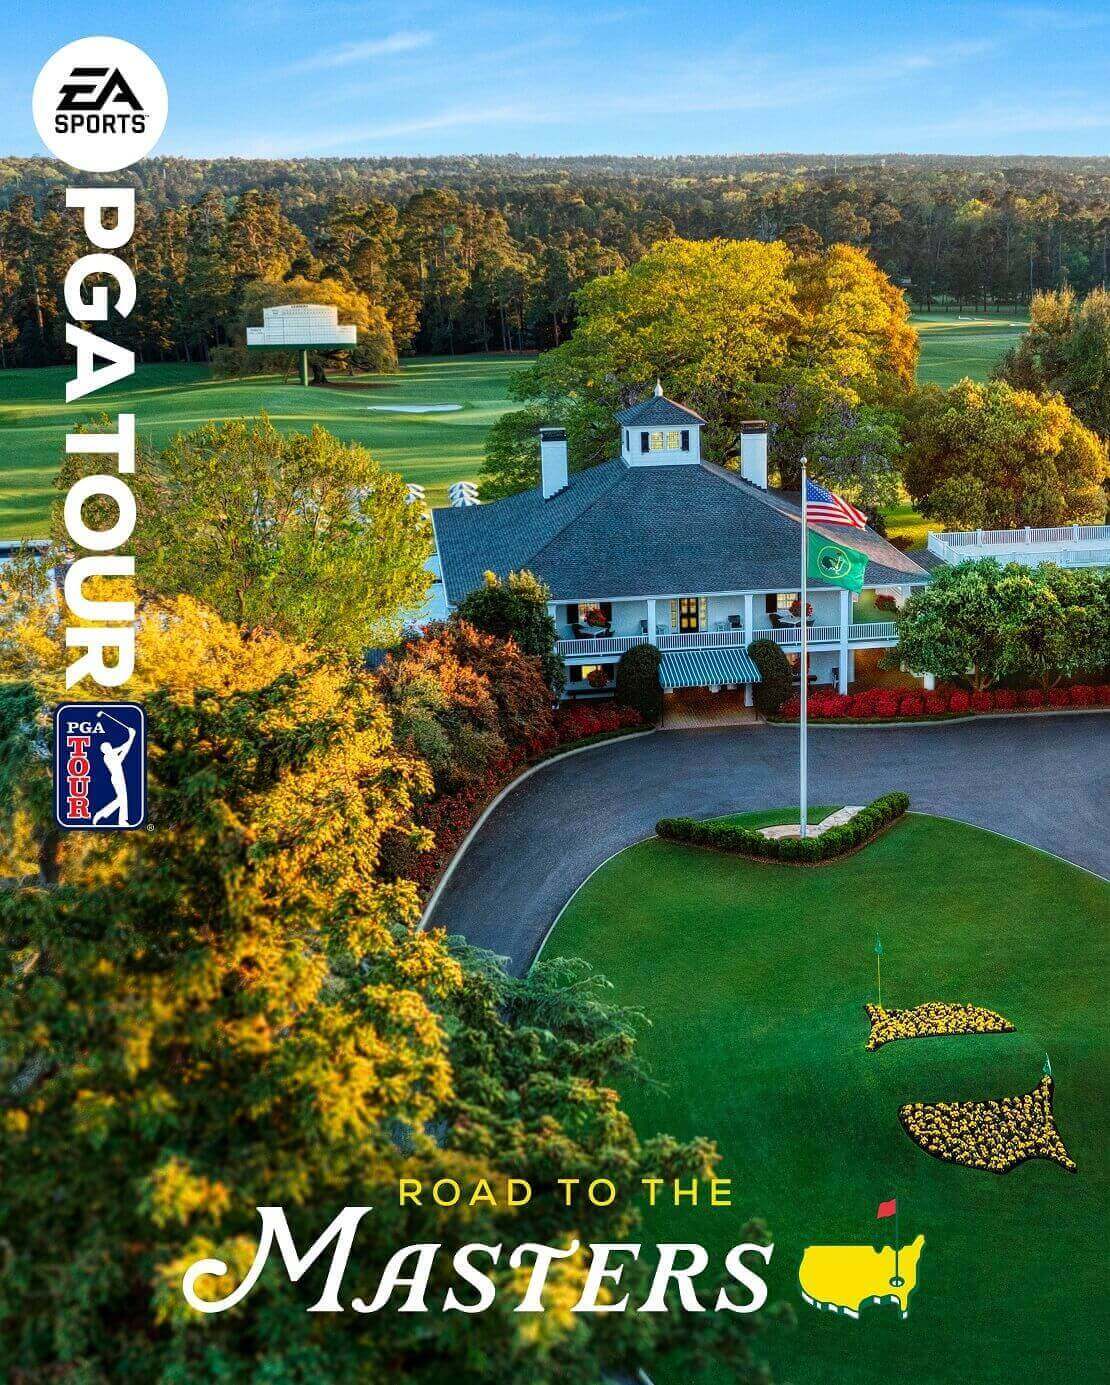 Coverbild für das EA Sports PGA Tour-Spiel